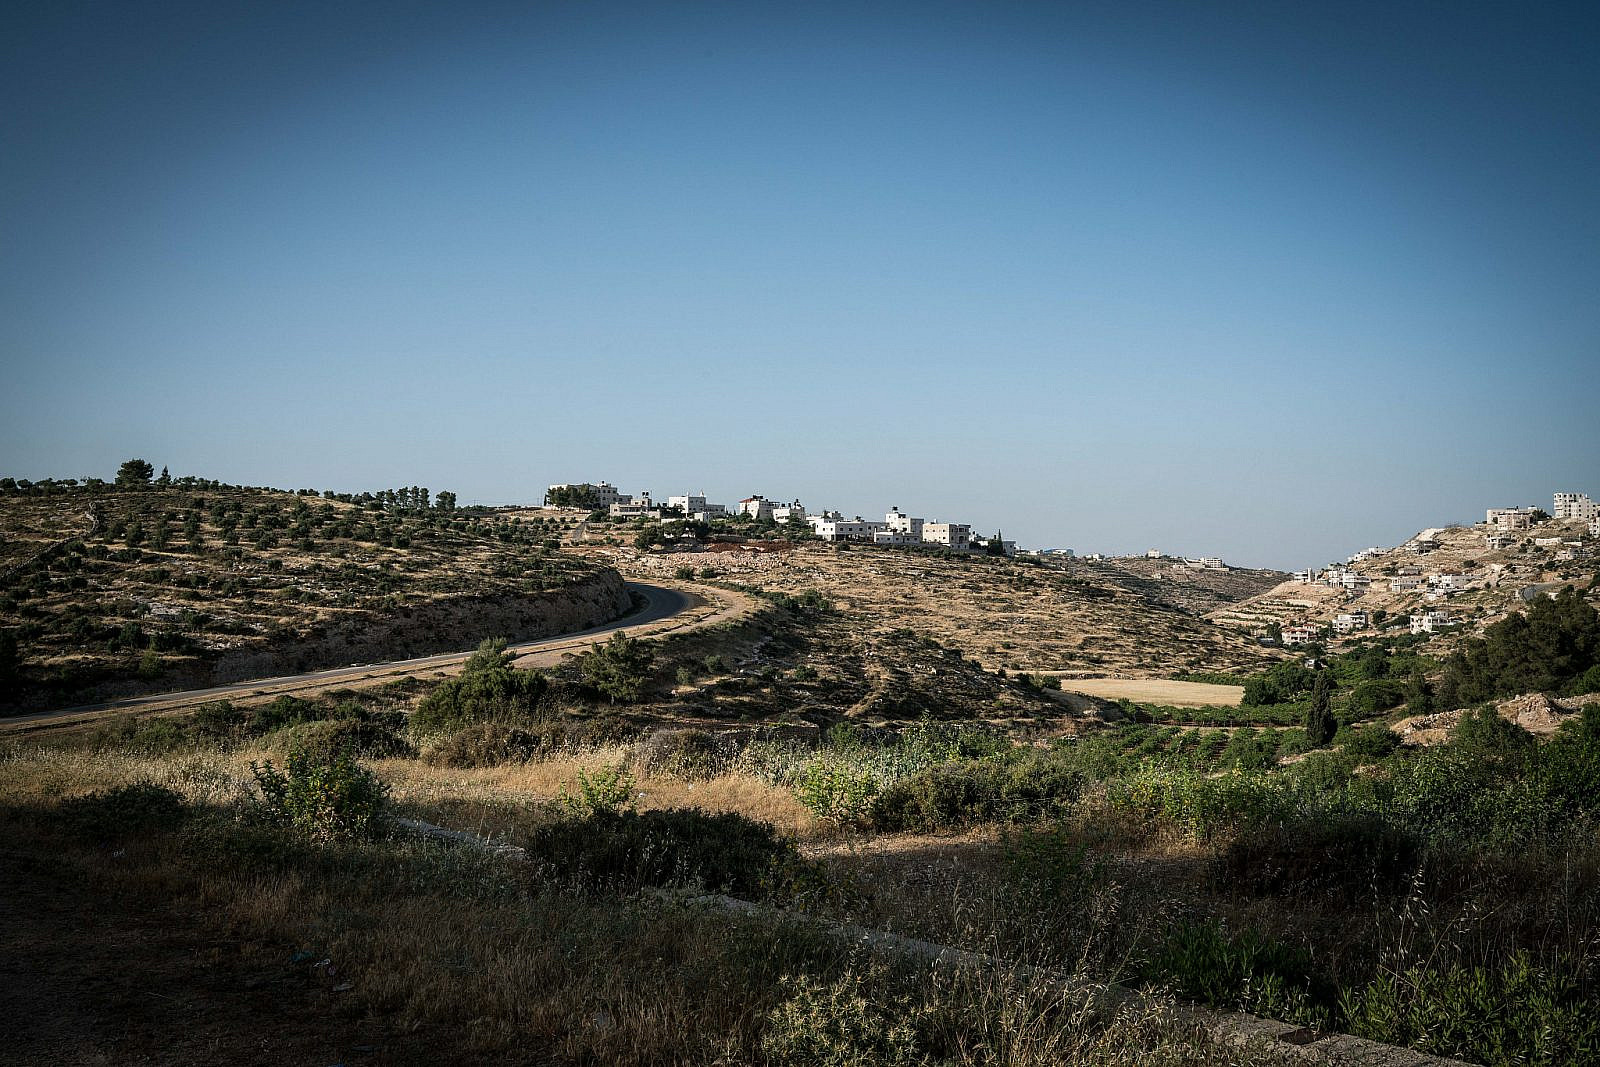 Land around the Israeli settlement of Efrat in the occupied West Bank. June, 2020. (Samar Hazboun)